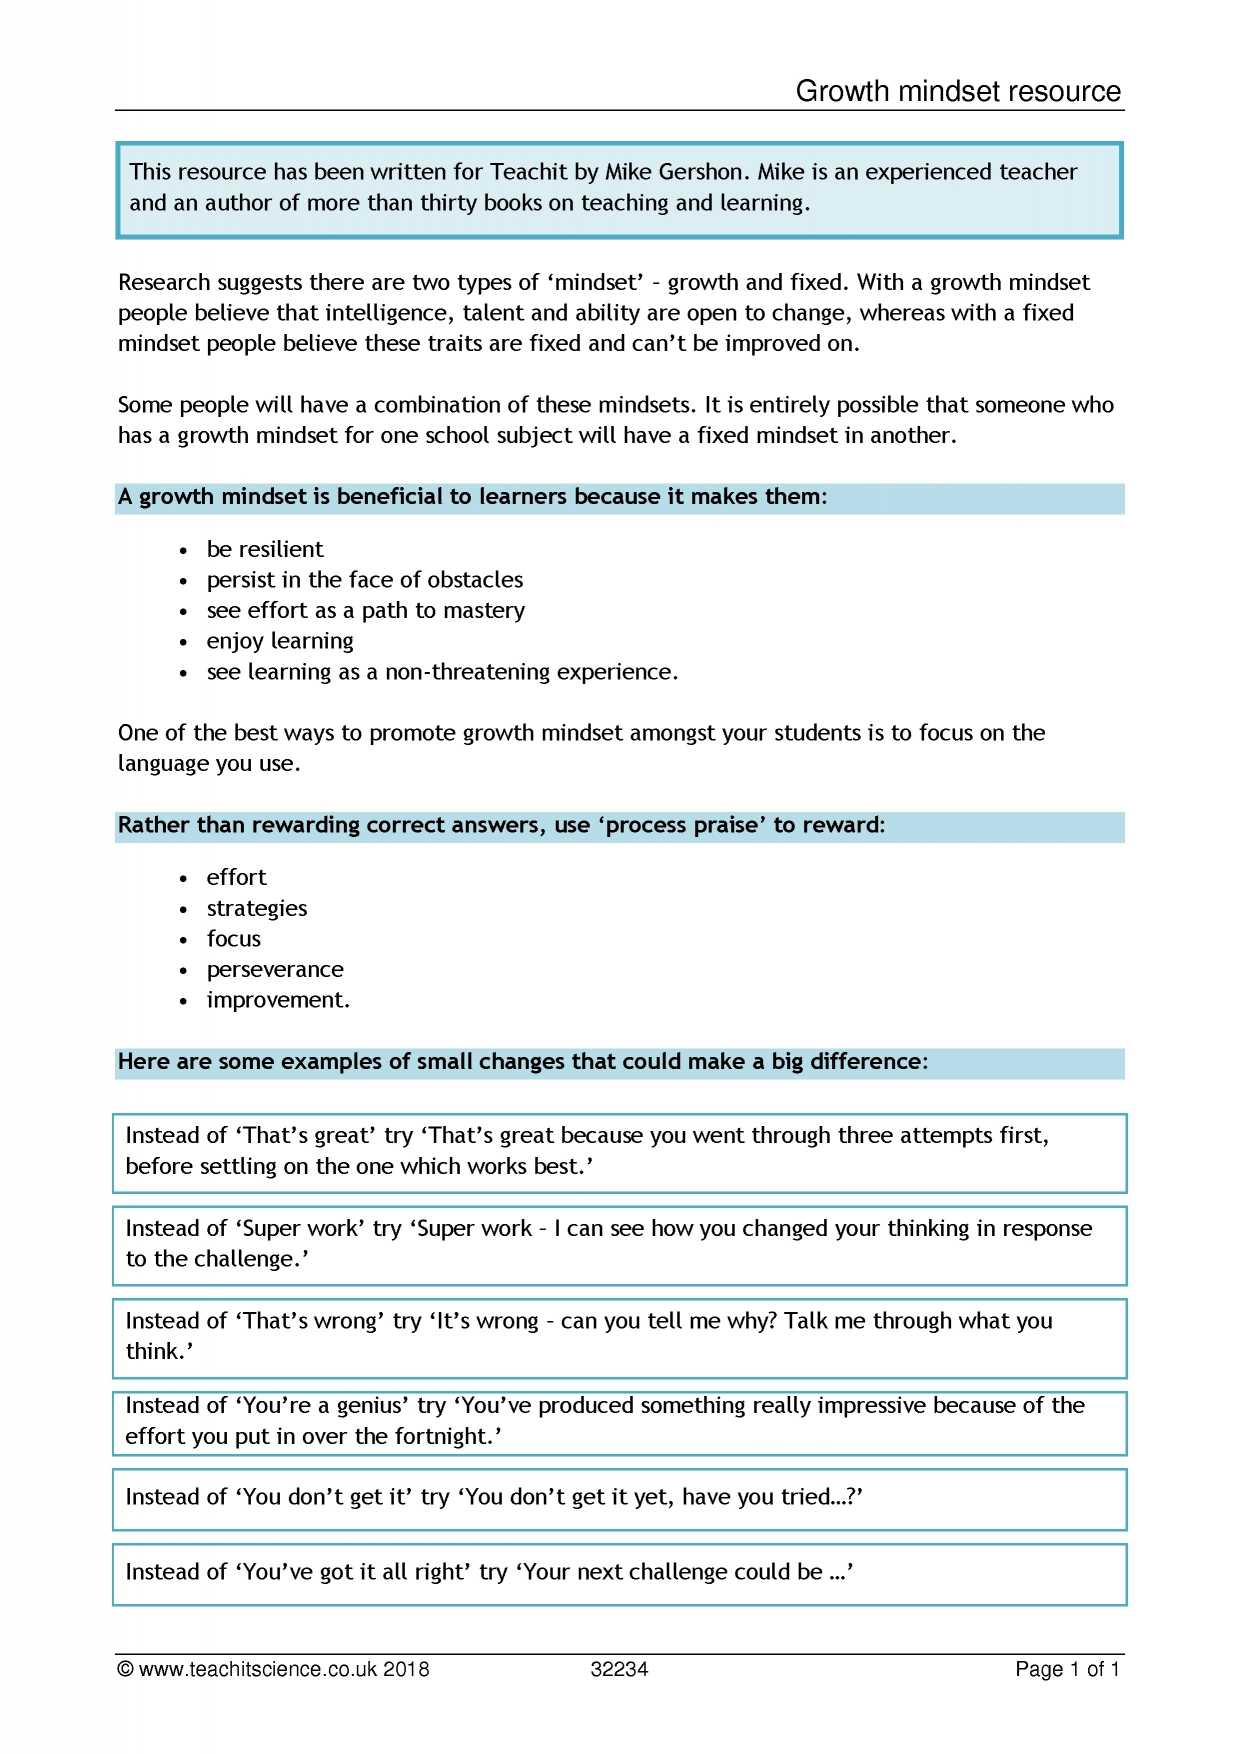 Growth Mindset Worksheet Pdf together with Ks4 Teaching Templates